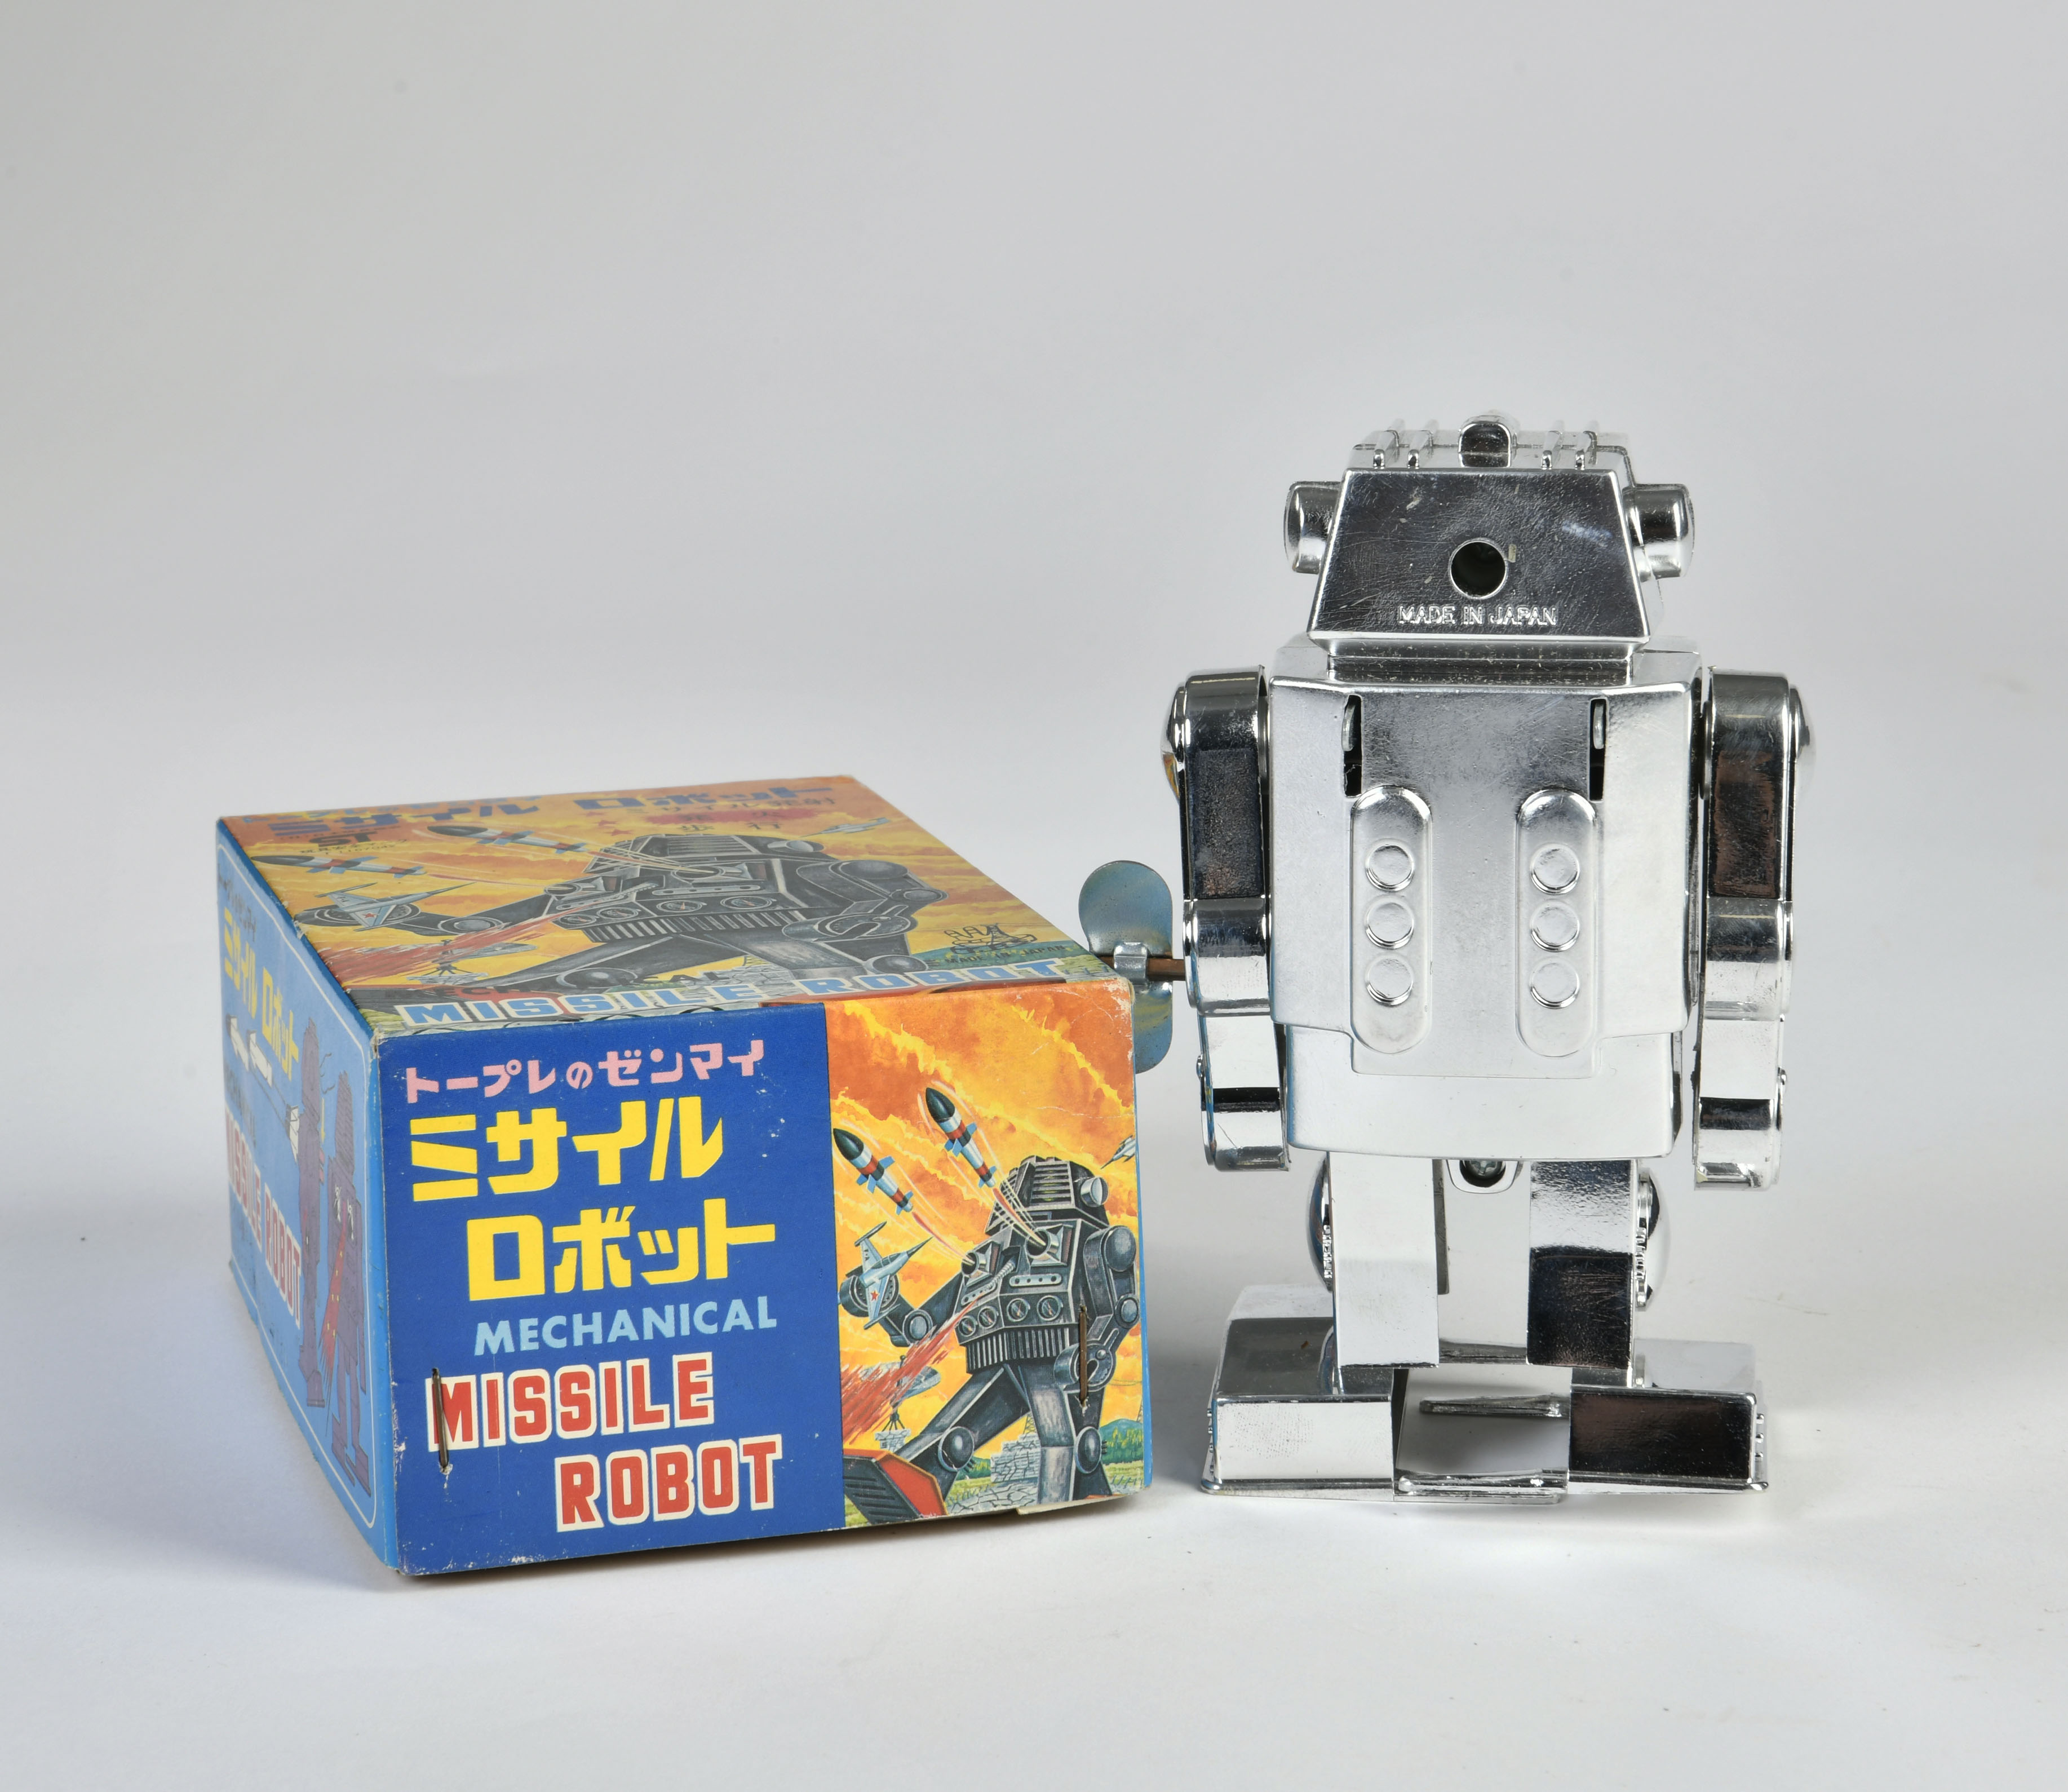 TPS, Missile Robot, Japan, 14 cm, plastic, cw defective & function ok, box, C 1 - Image 2 of 2